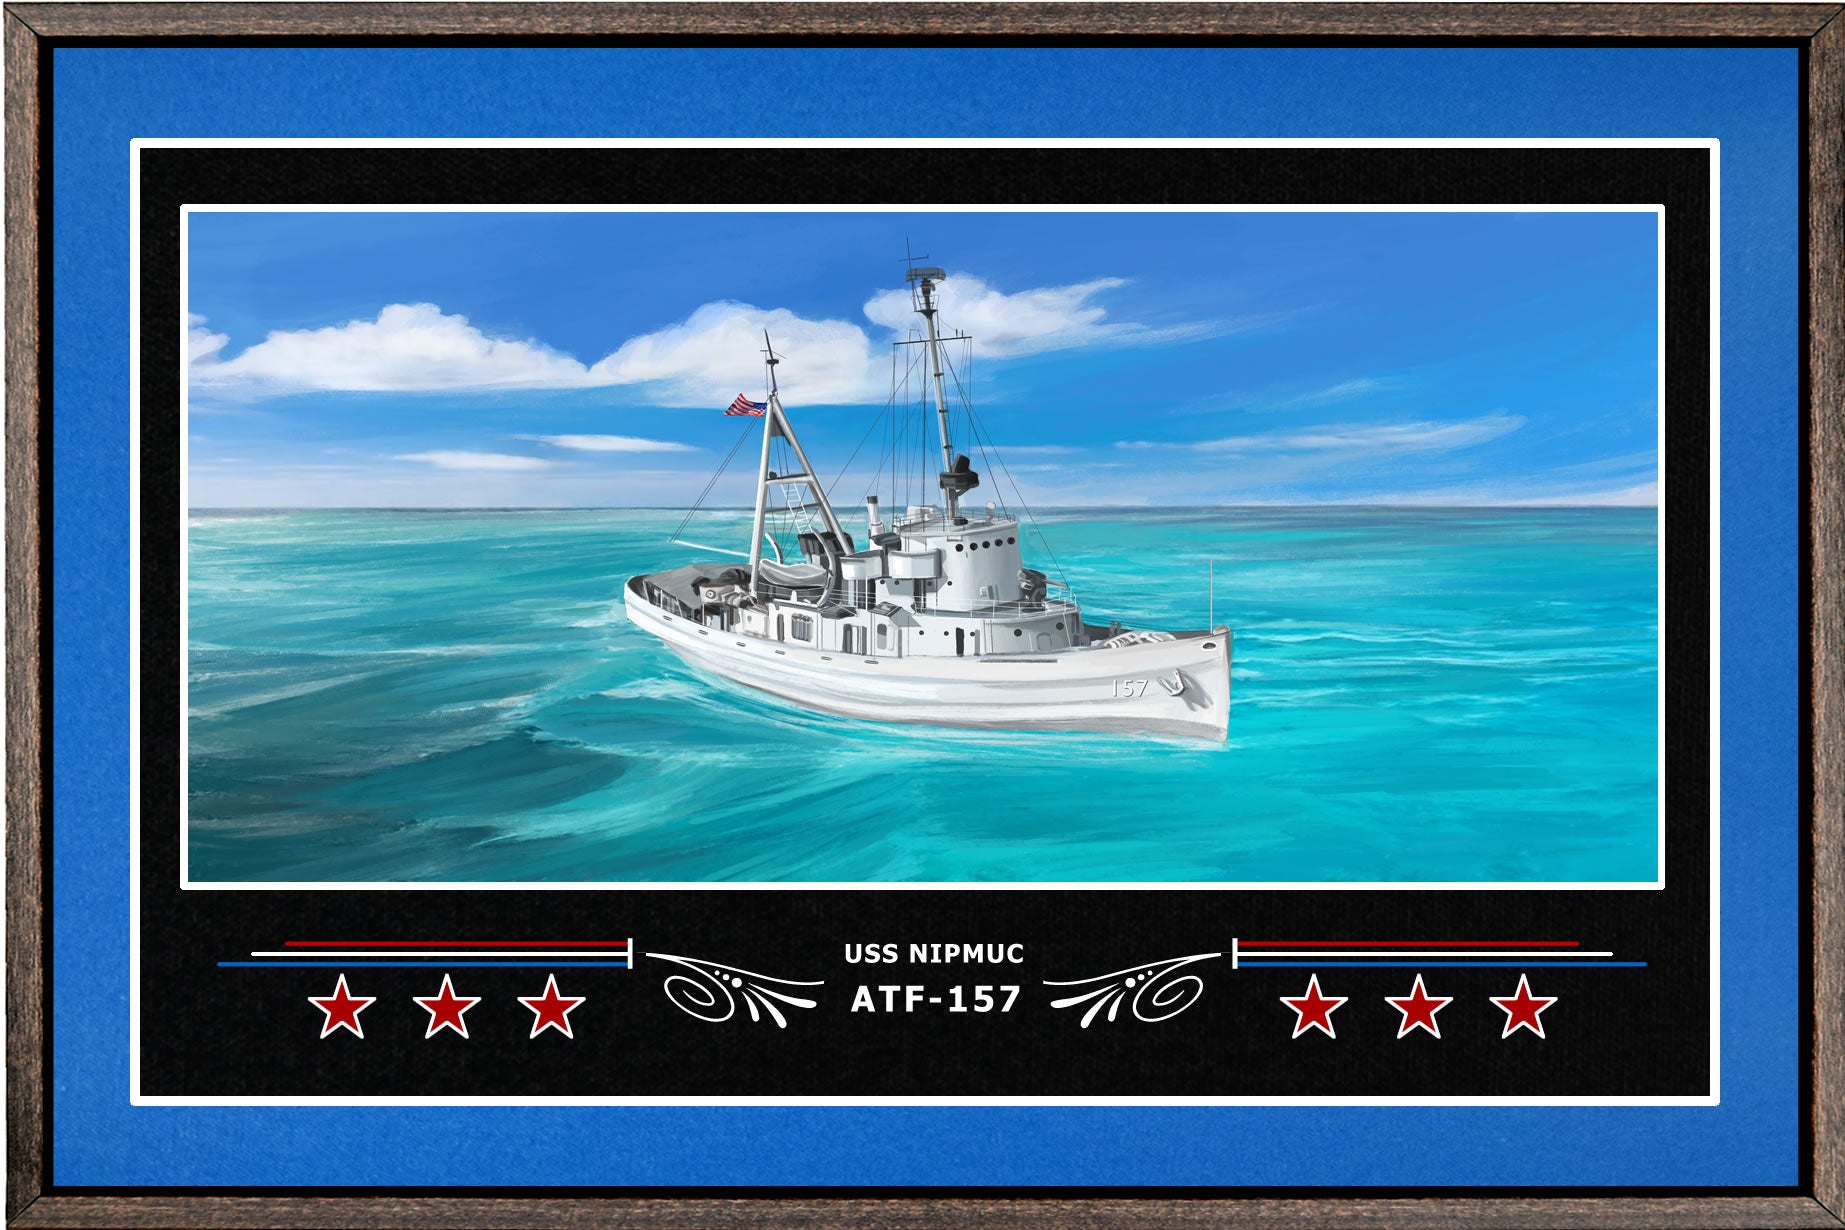 USS NIPMUC ATF 157 BOX FRAMED CANVAS ART BLUE